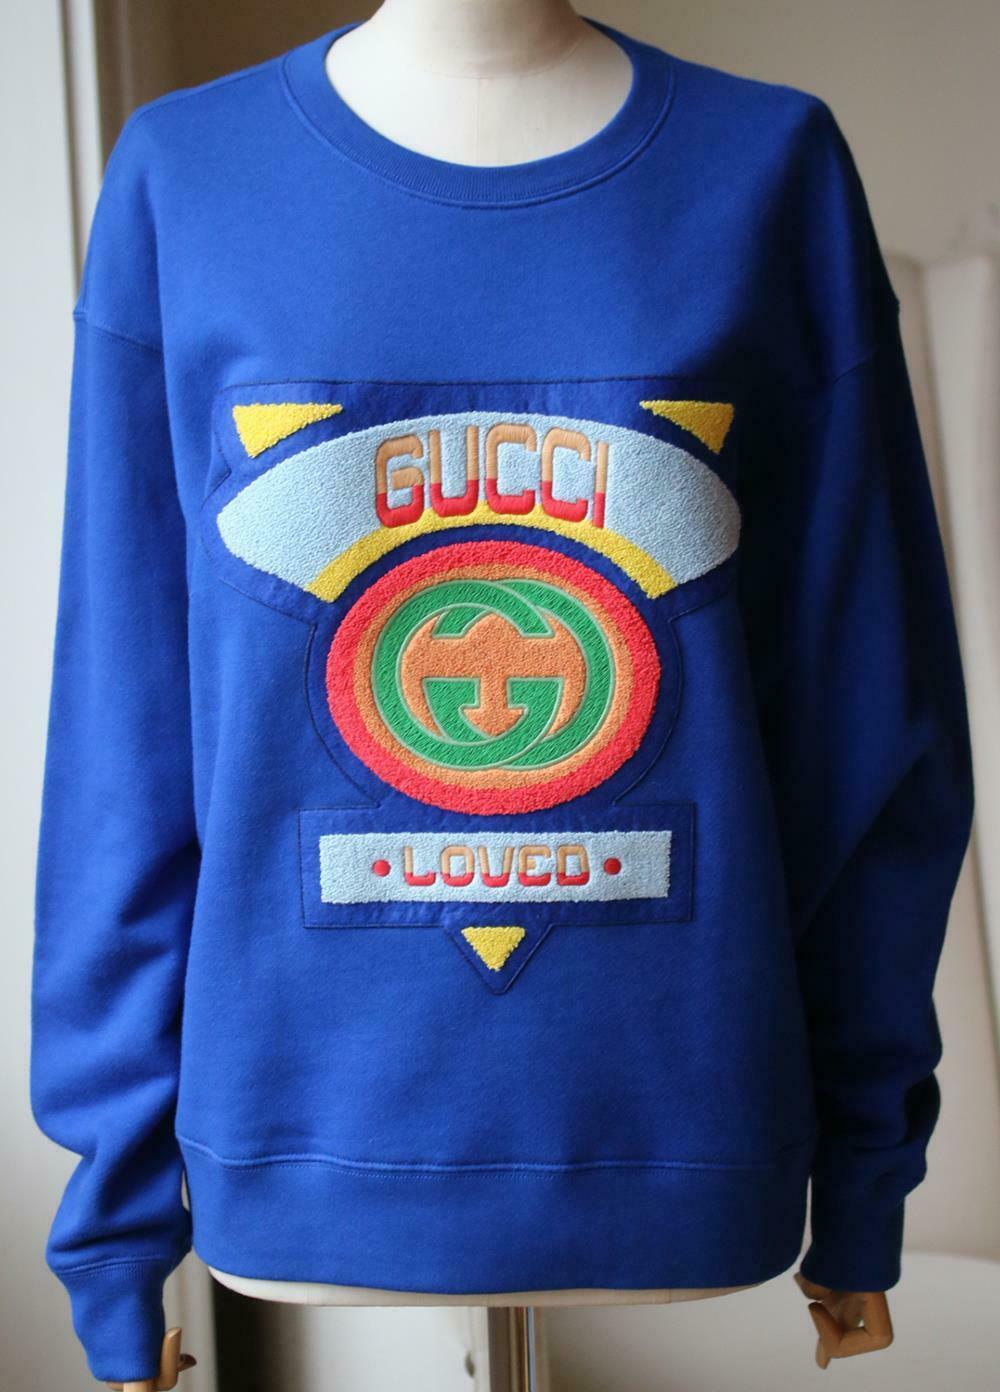 gucci 80s patch sweatshirt